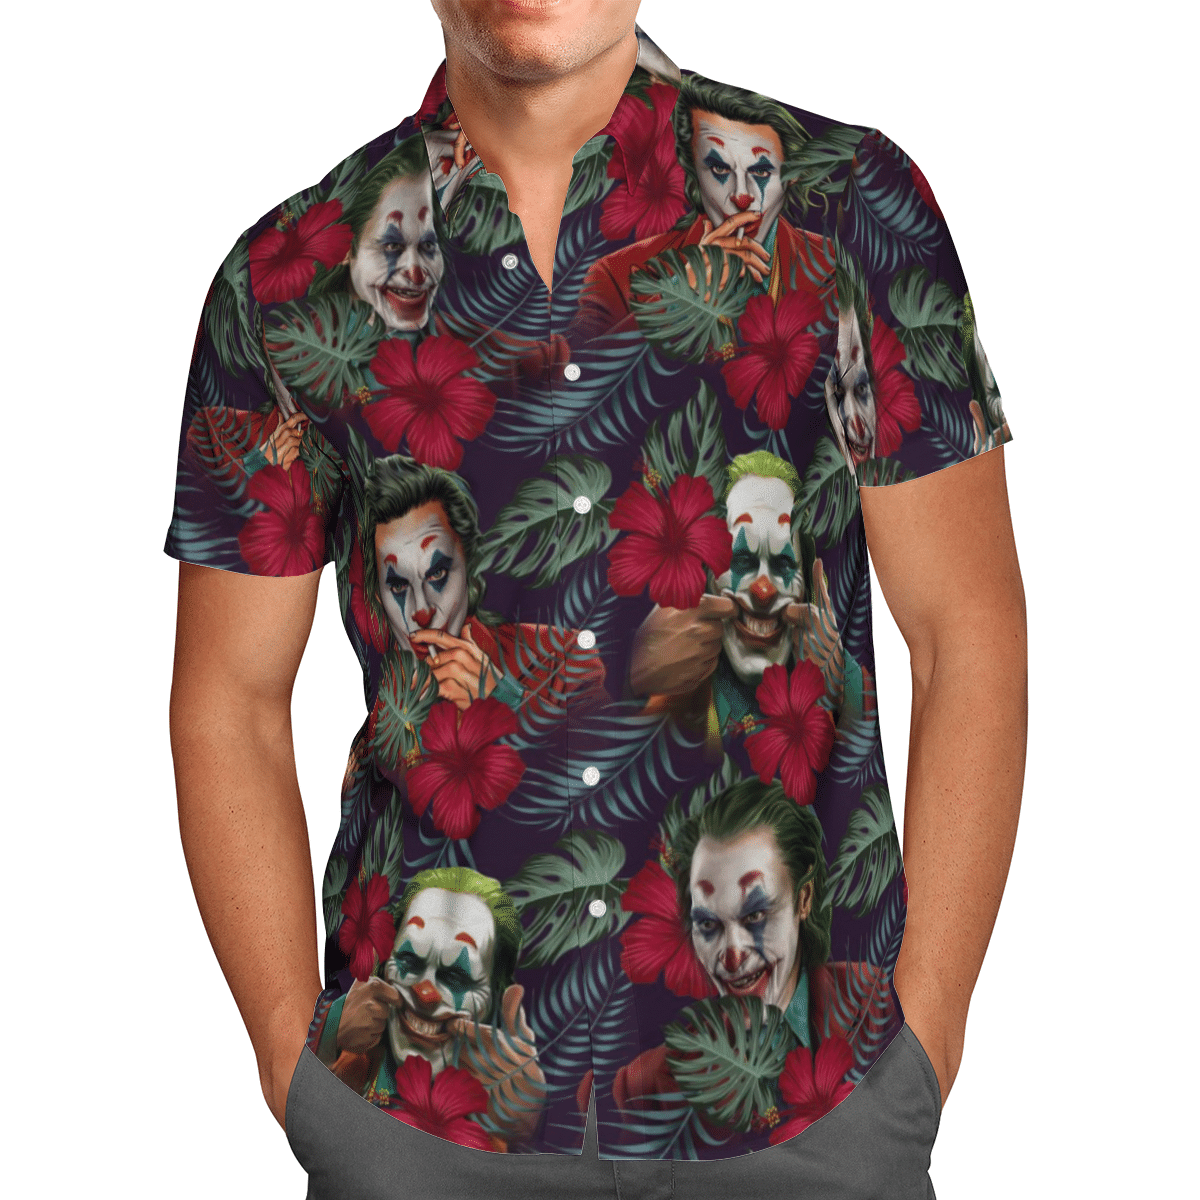 Joker Hawaiian shirt and short – LIMITED EDITION